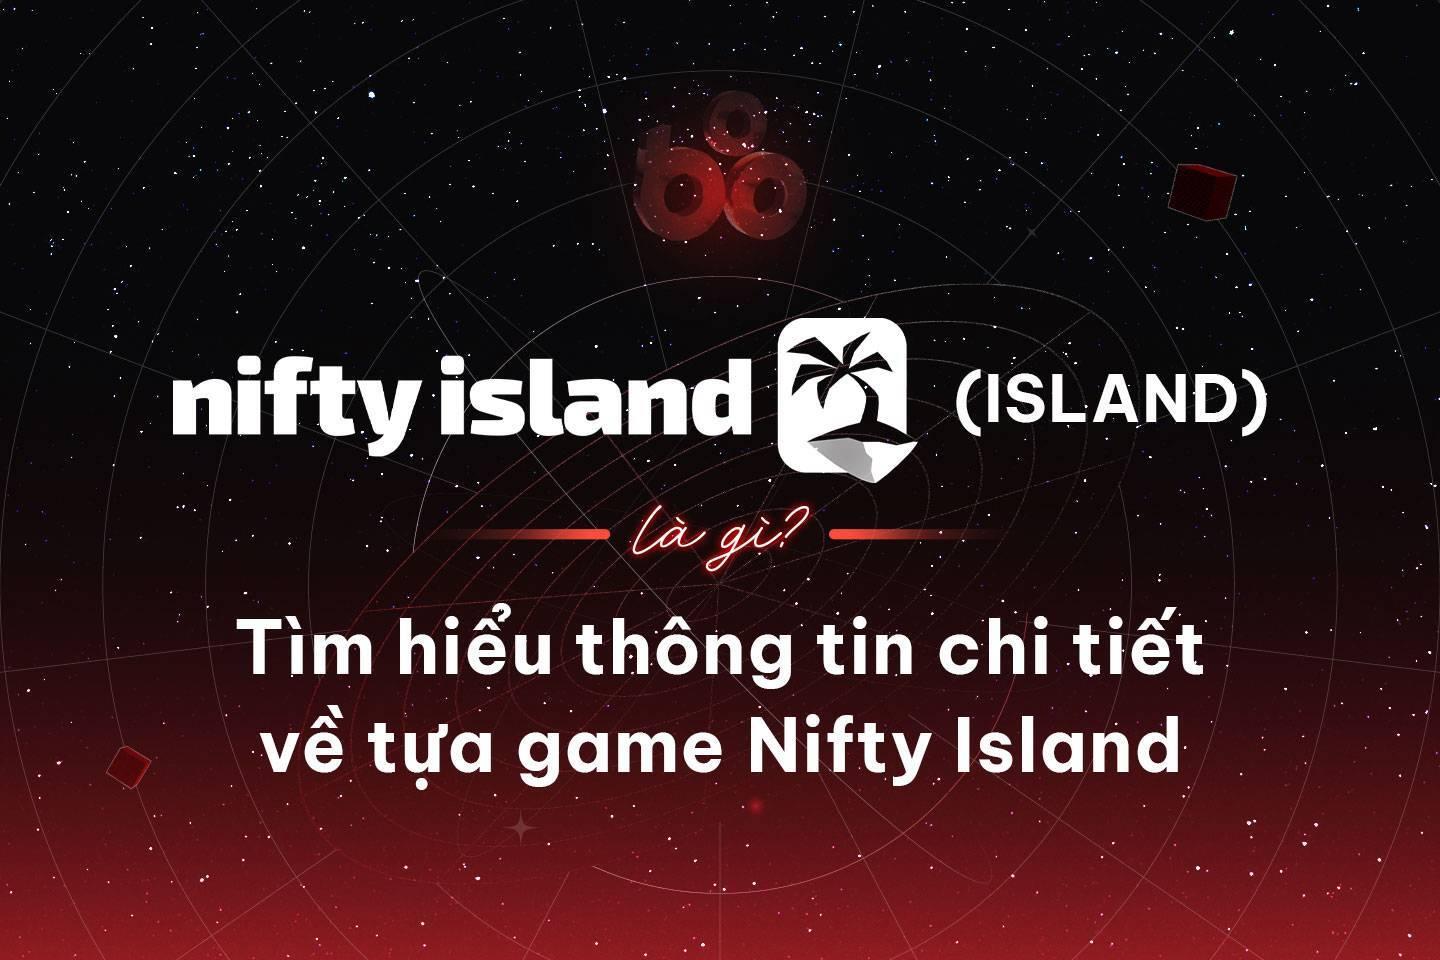 nifty-island-island-la-gi-tim-hieu-thong-tin-chi-tiet-ve-tua-game-nifty-island